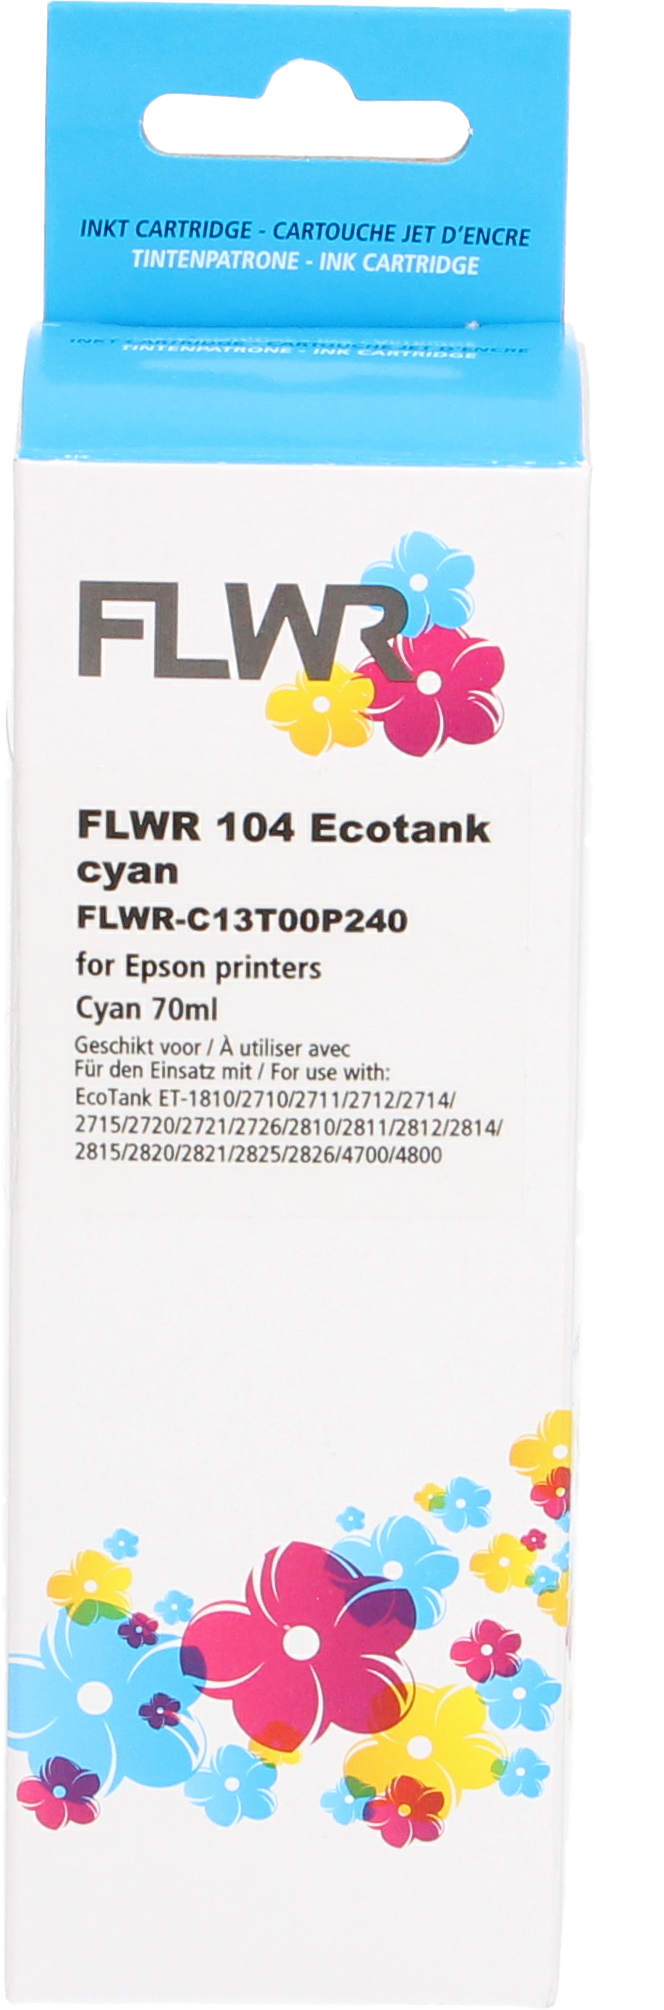 FLWR Epson 104 Ecotank cyaan